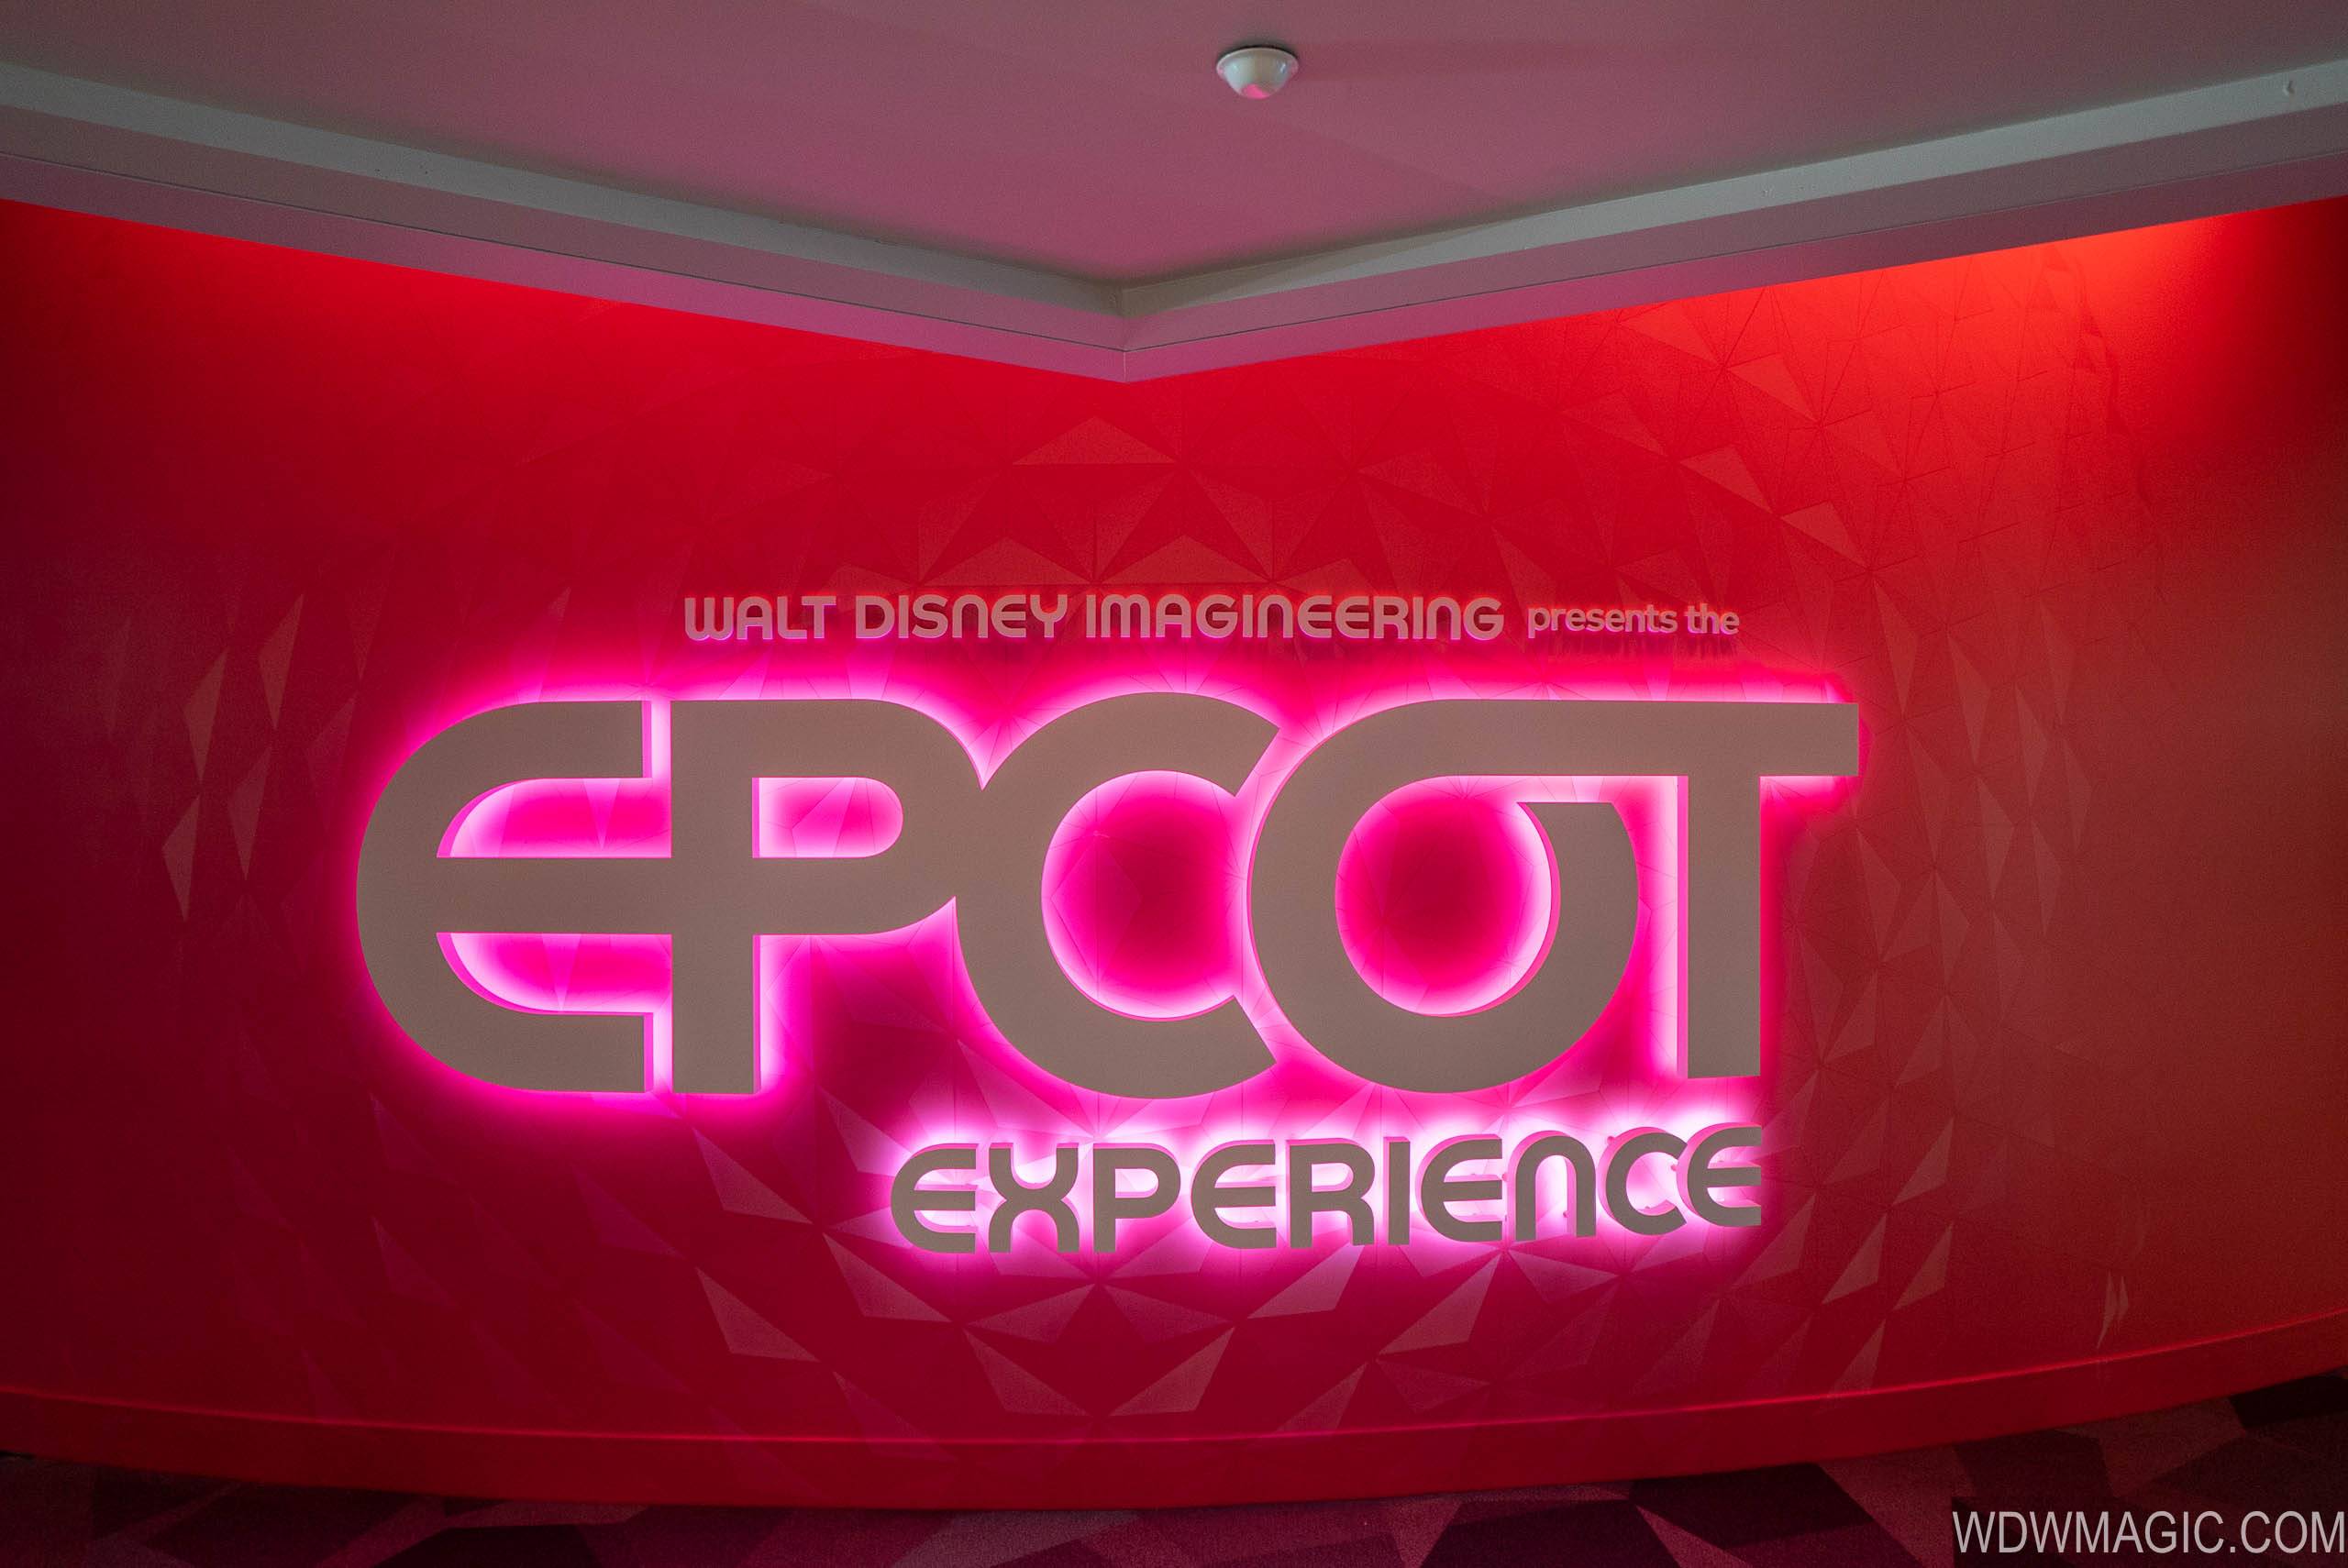 Walt Disney Imagineering presents the Epcot Experience